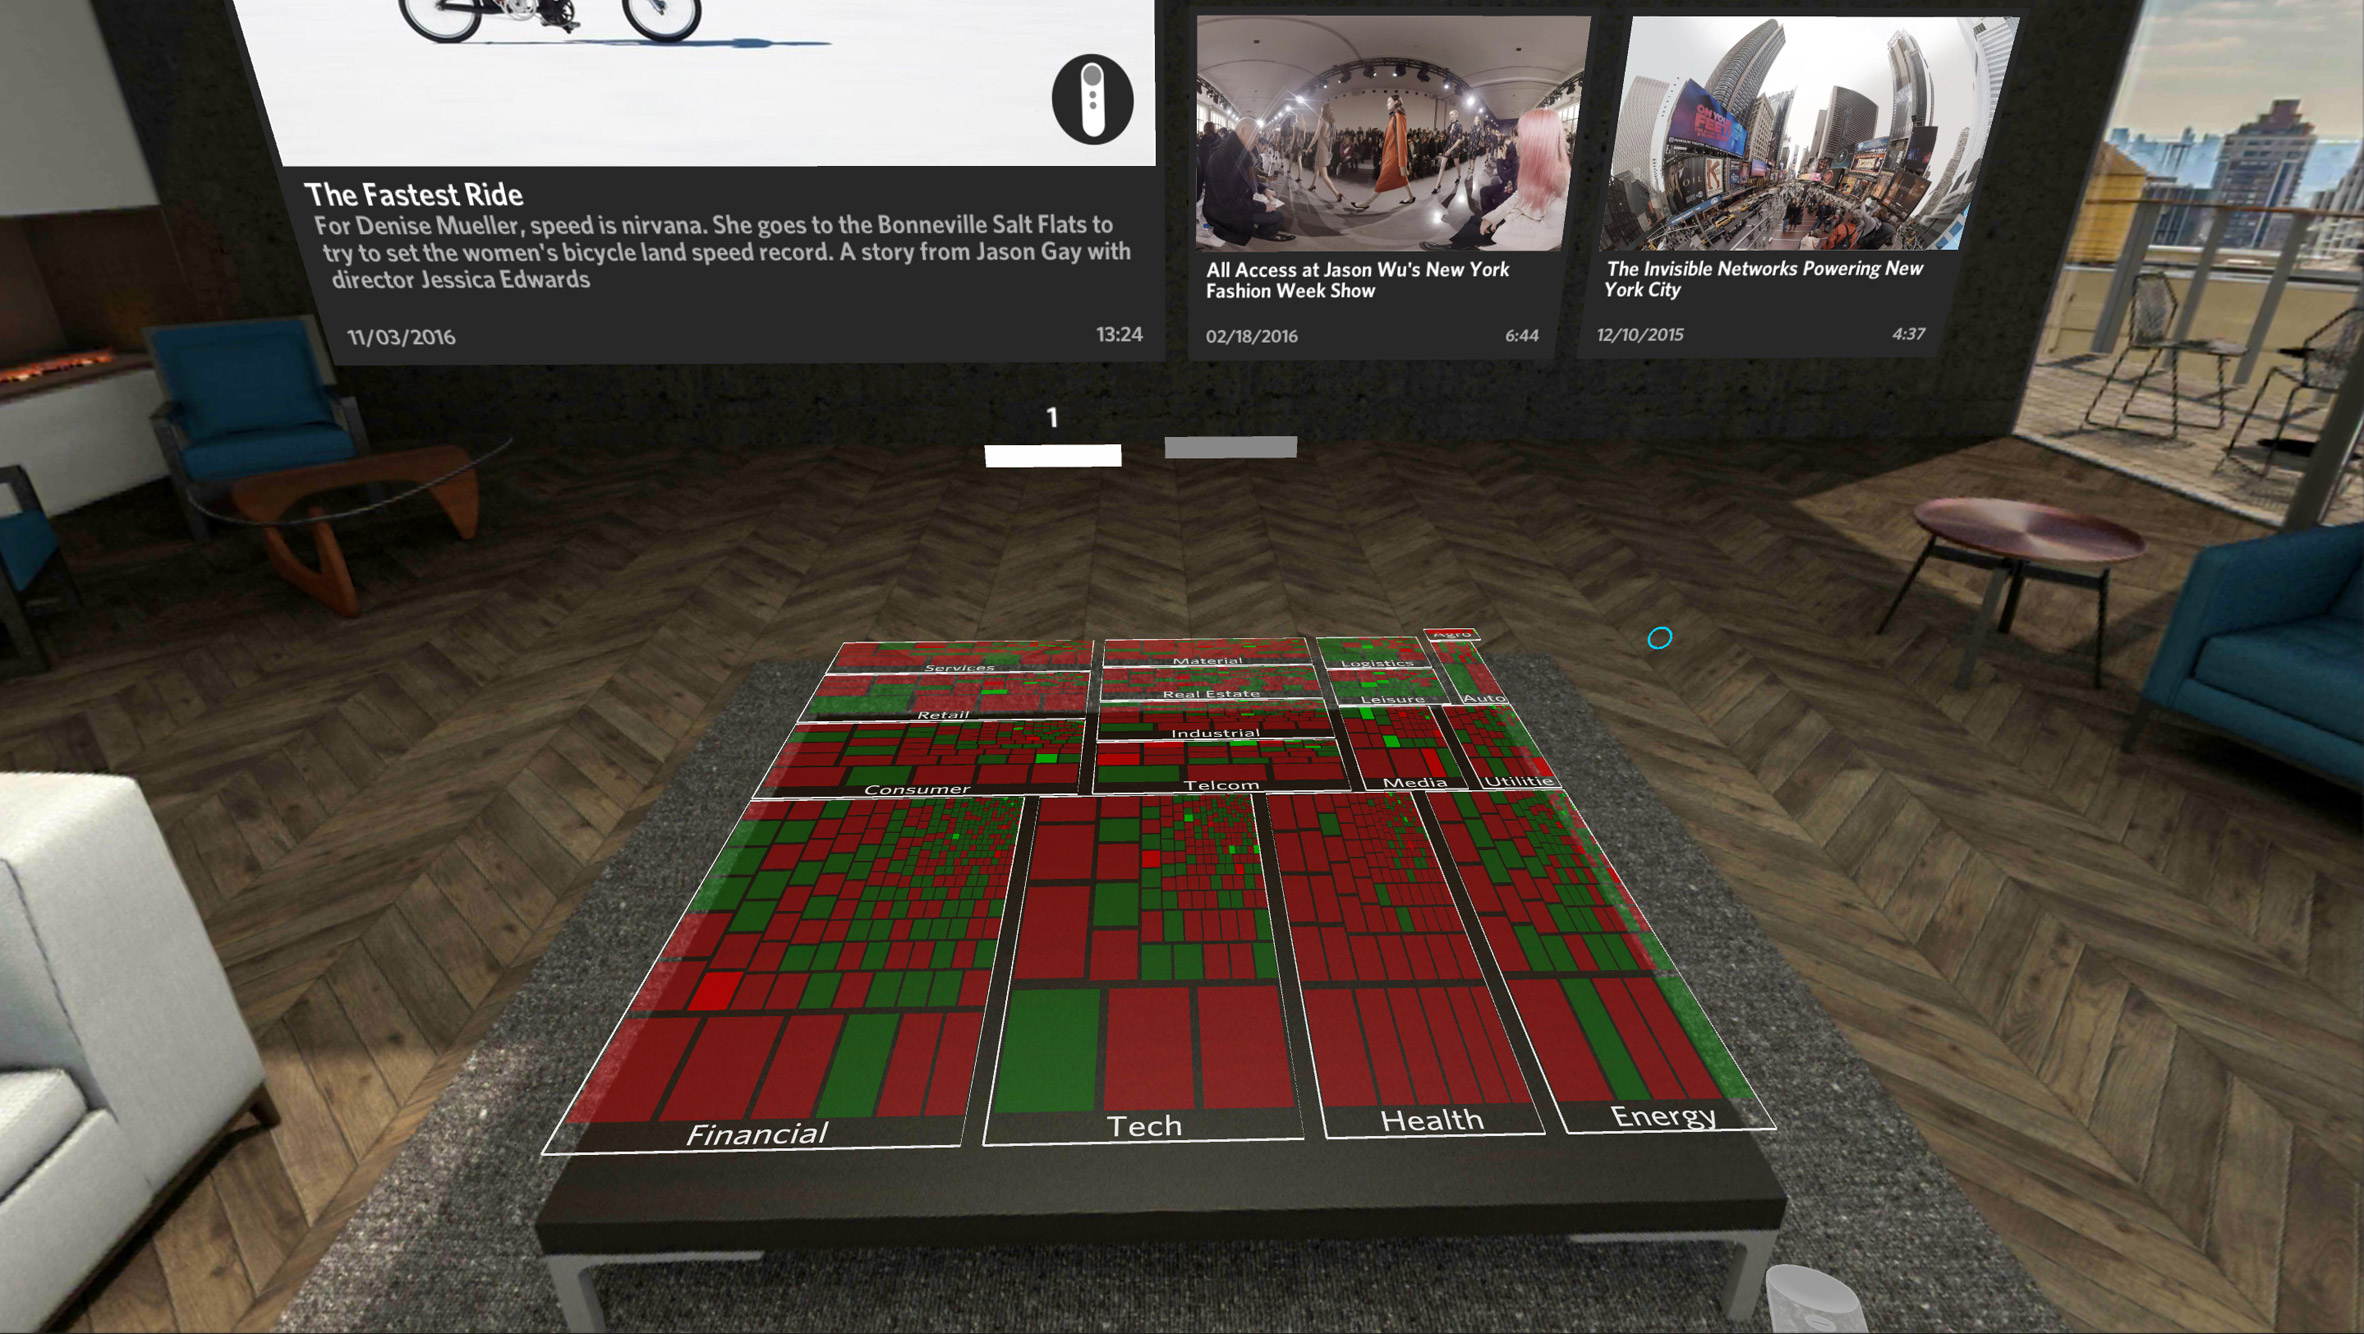 Michaelis Boyd designs virtual reality environment for Wall Street Journal